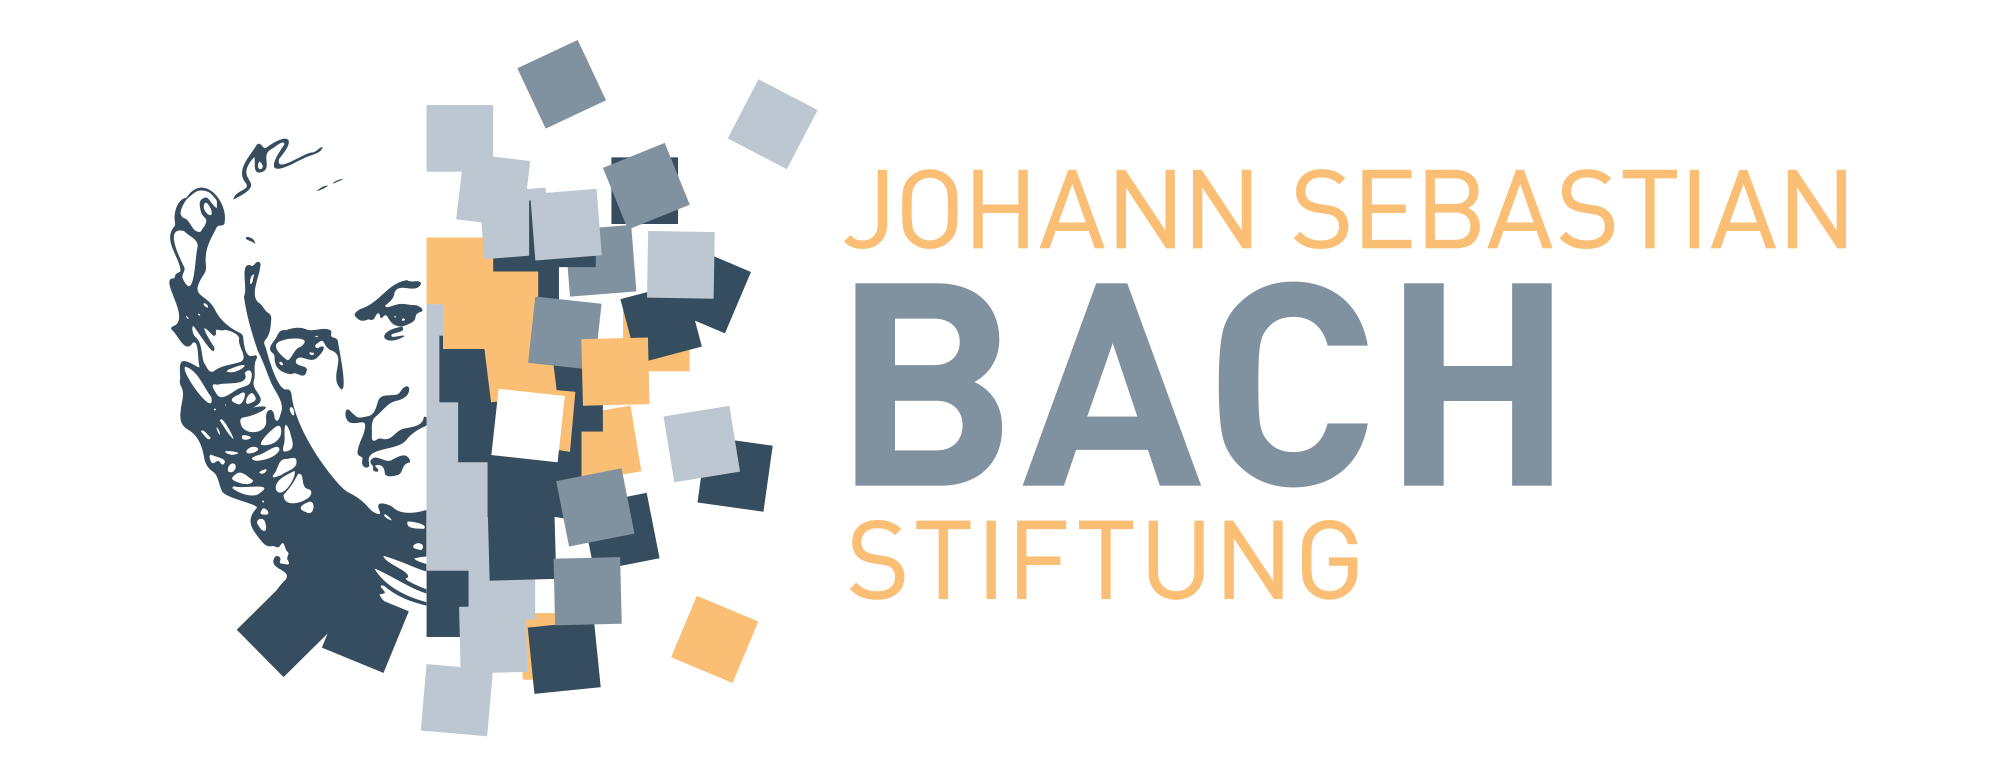 La Fondation Jean-Sébastien Bach